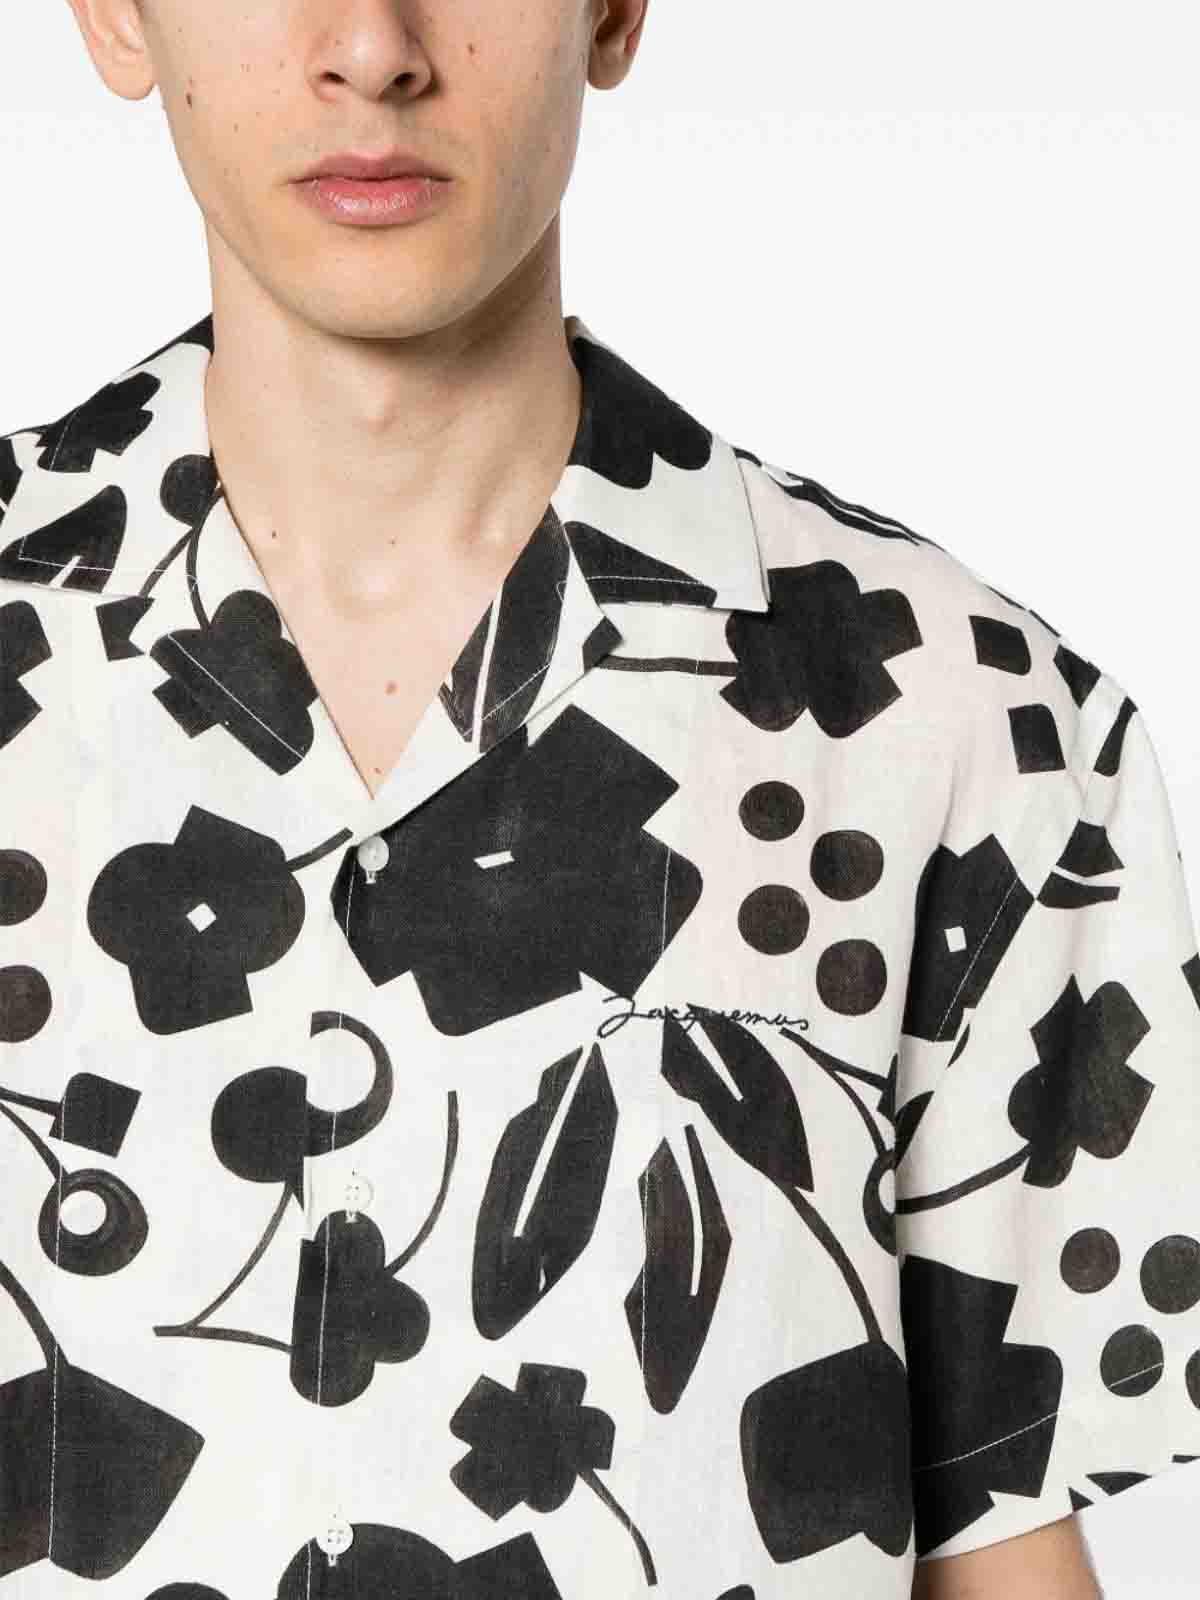 Shop Jacquemus Black And White Floral Shirt Camp Collar